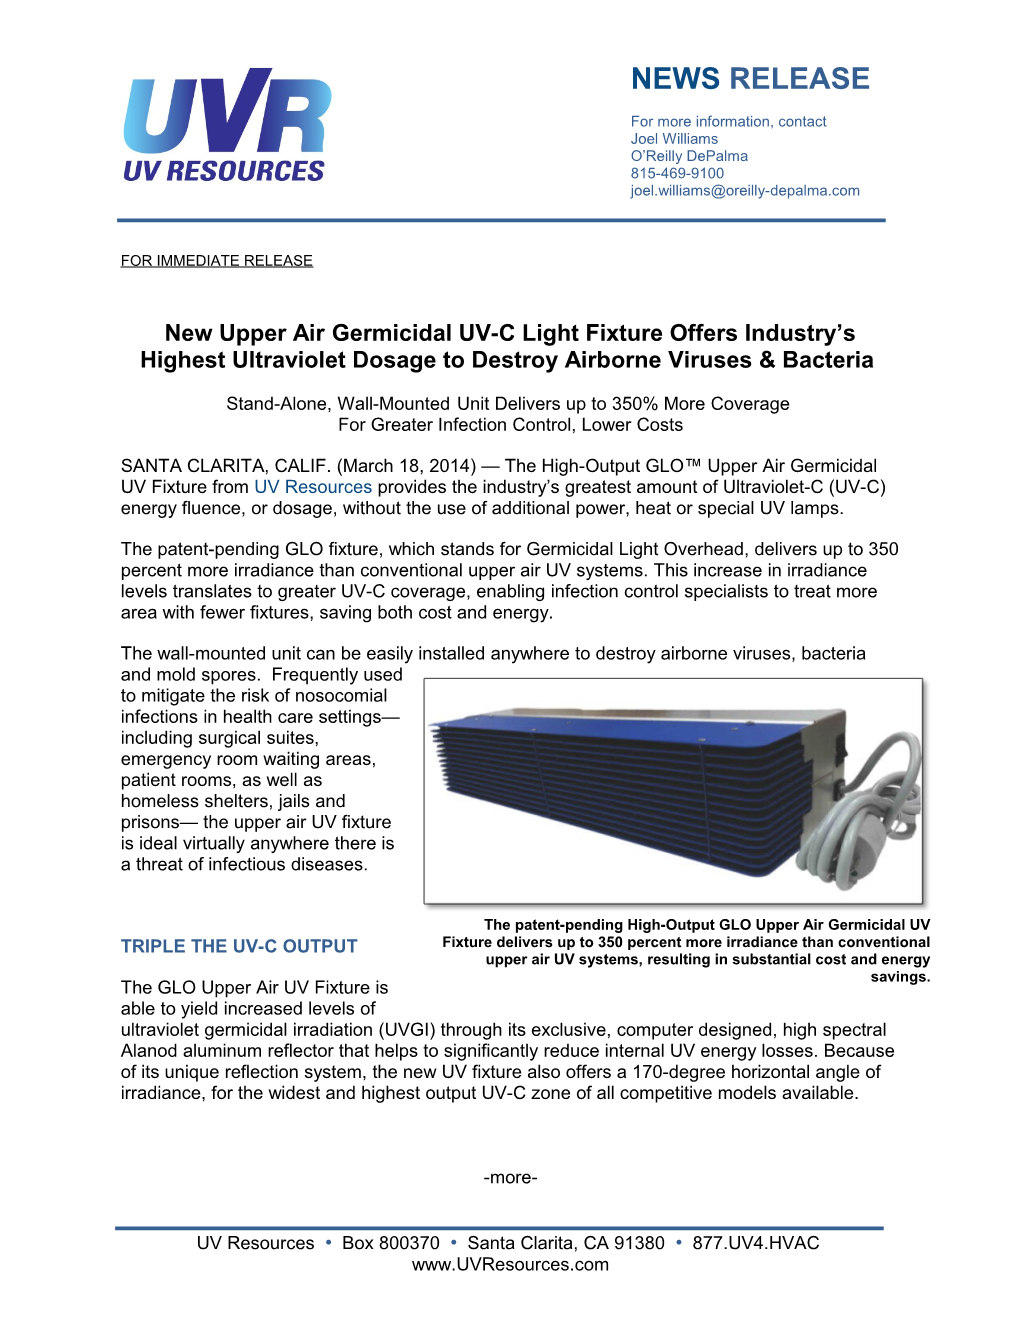 Uv Resources Press Release: Glo Upper Air Uv Germicidal Series1